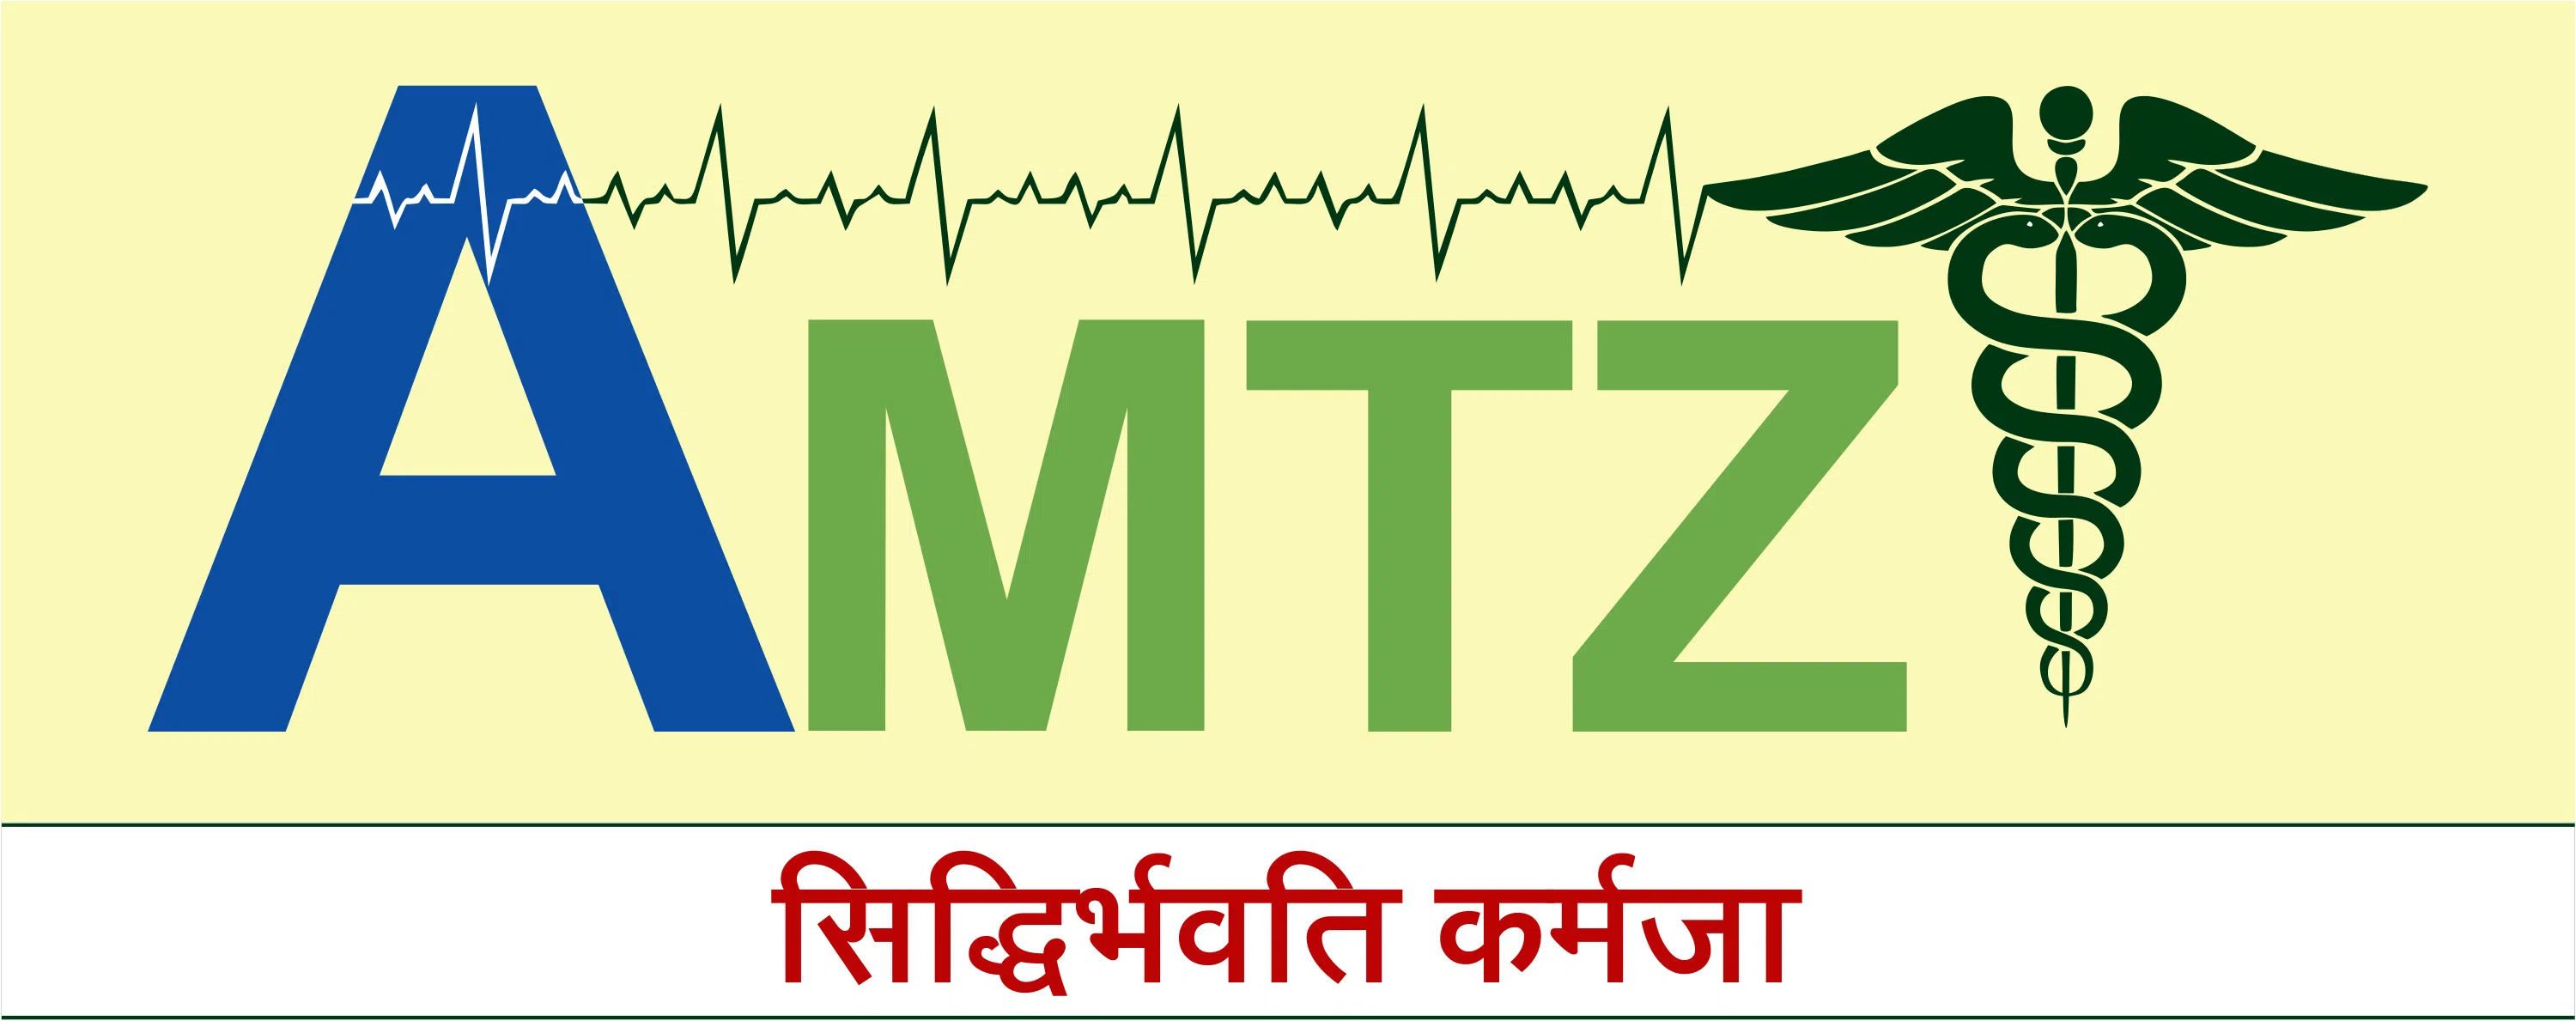 Andhra Pradesh Medtech Zone Limited